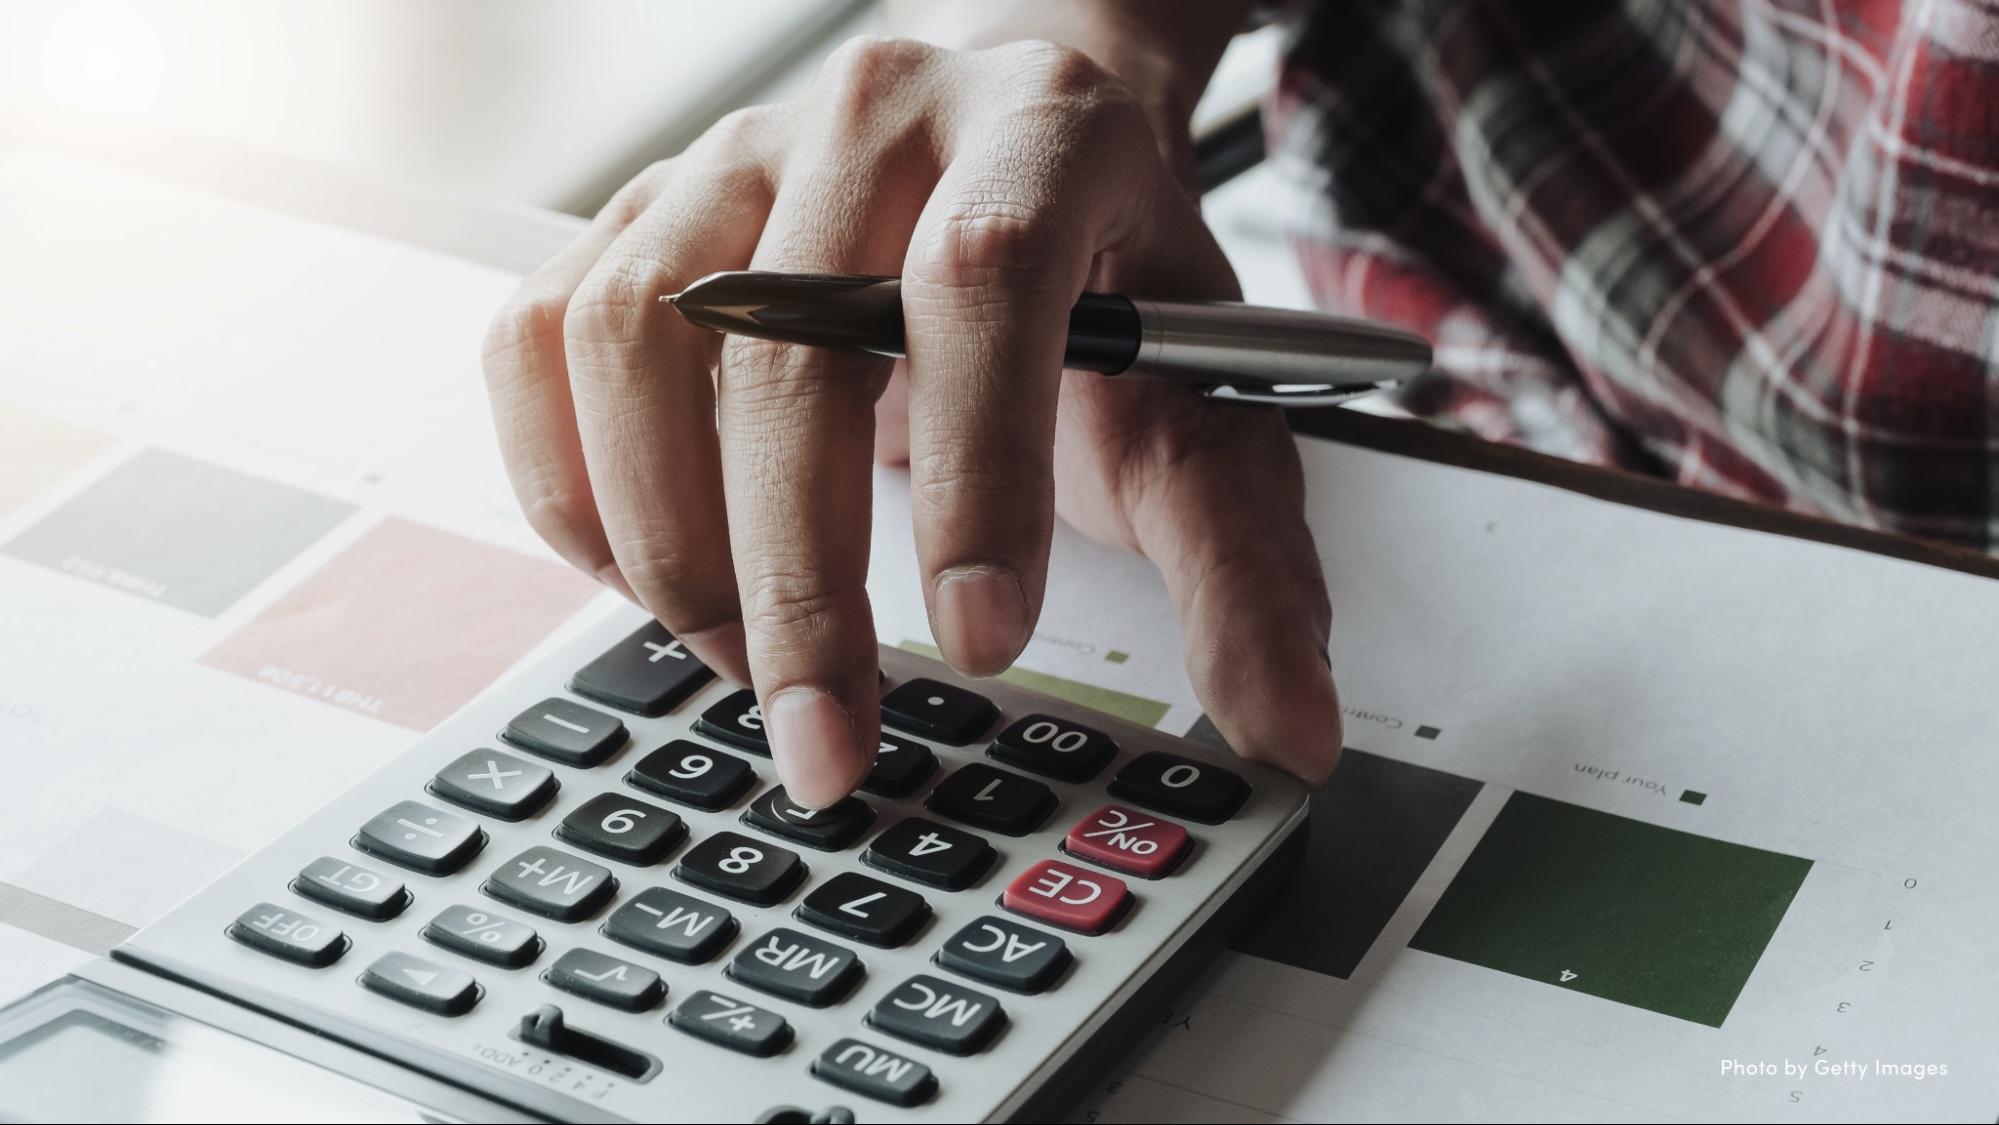 Close-up photo of a man using a calculator.